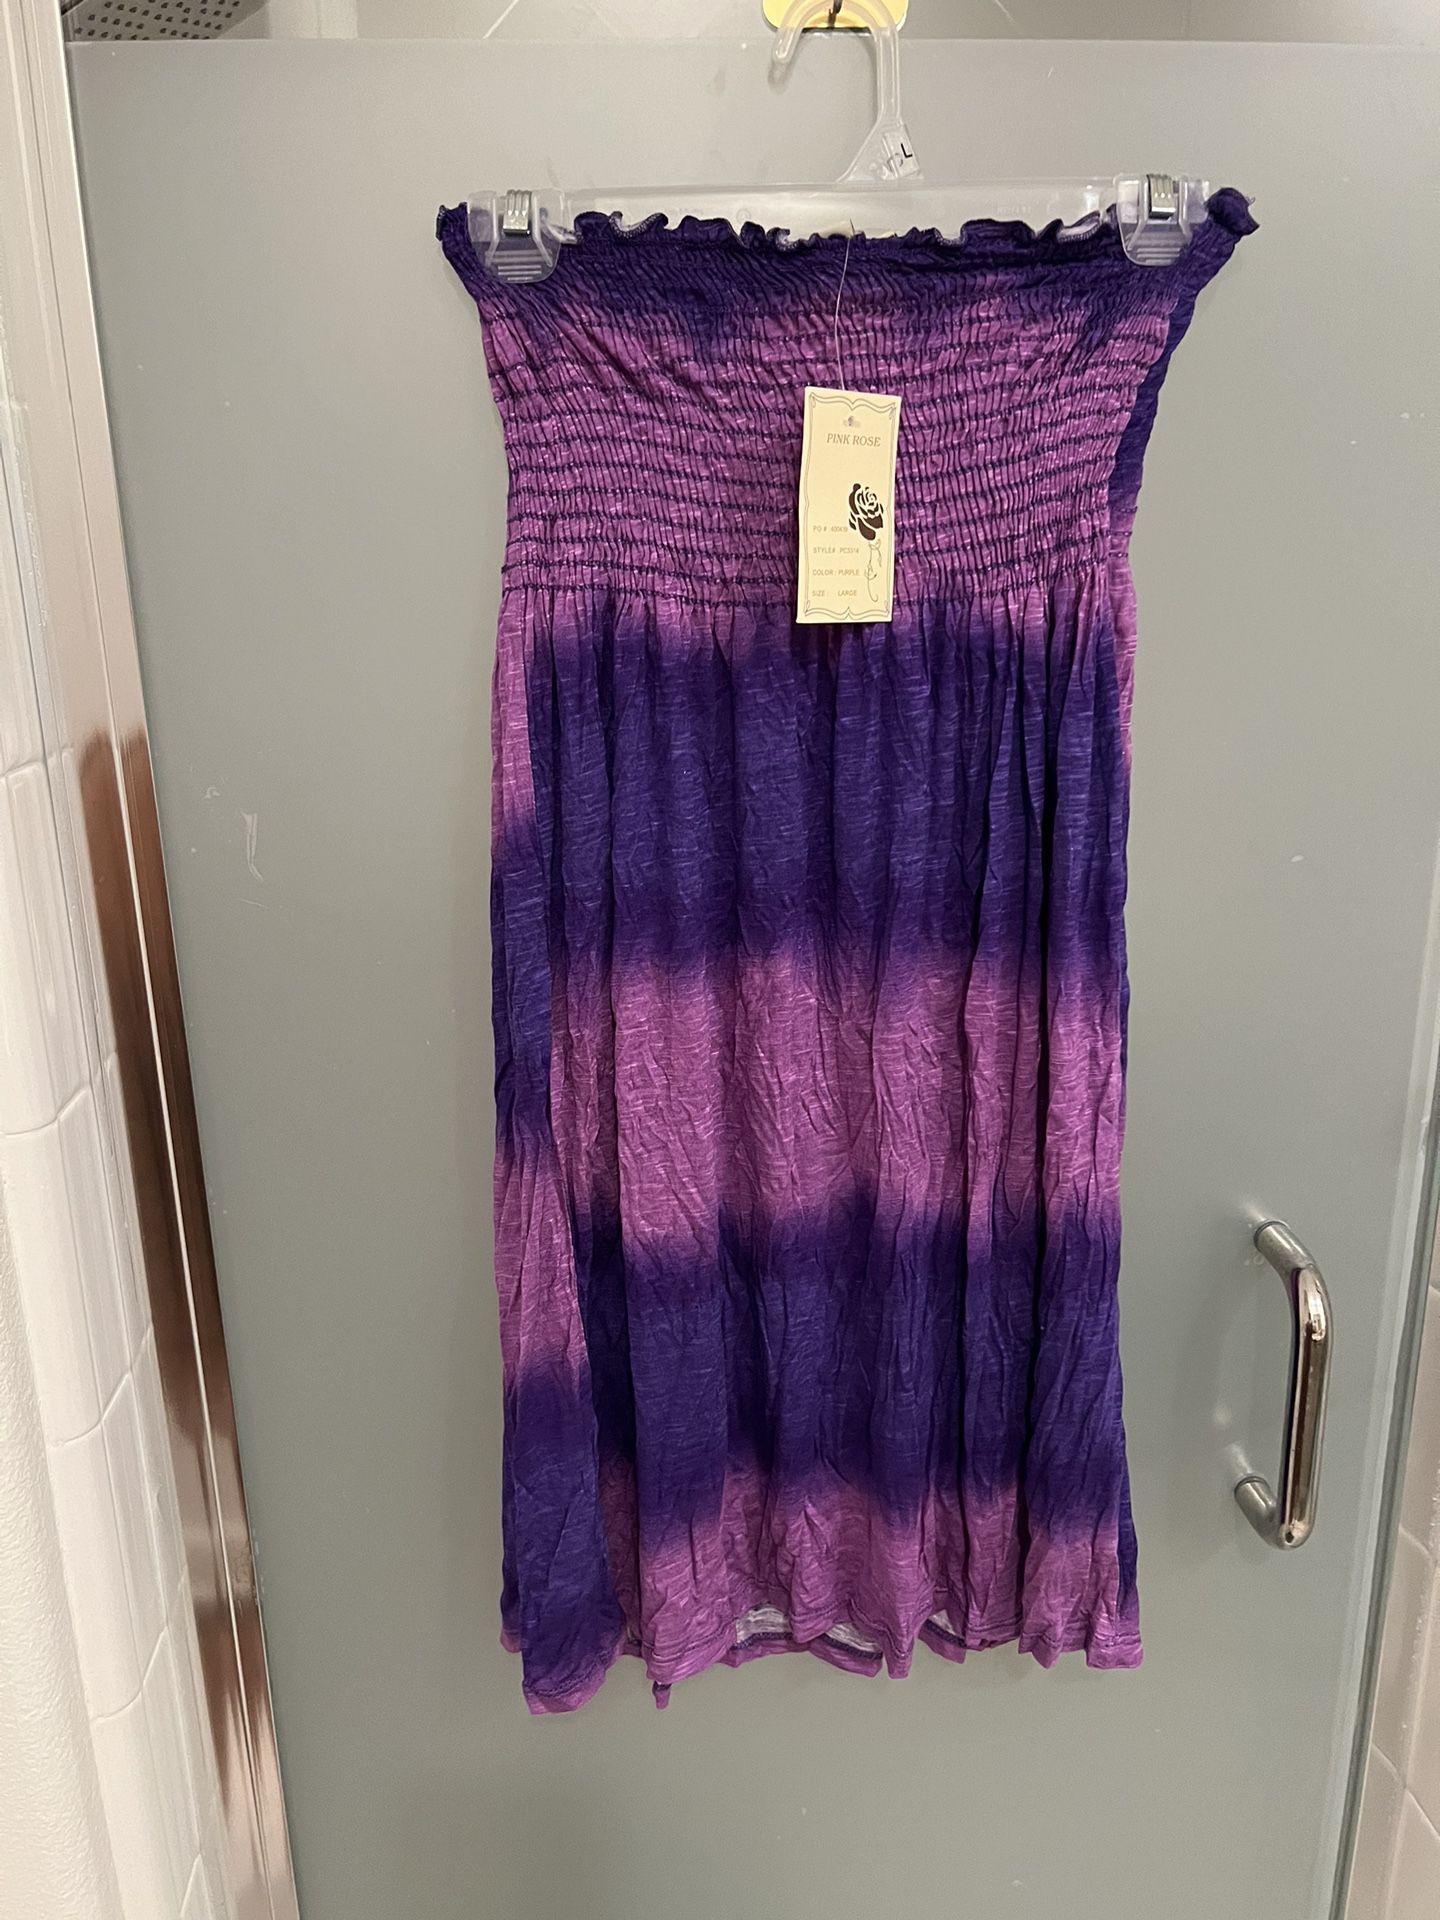 New Purple Tie Dye Stripe Strapless Smocked Dress